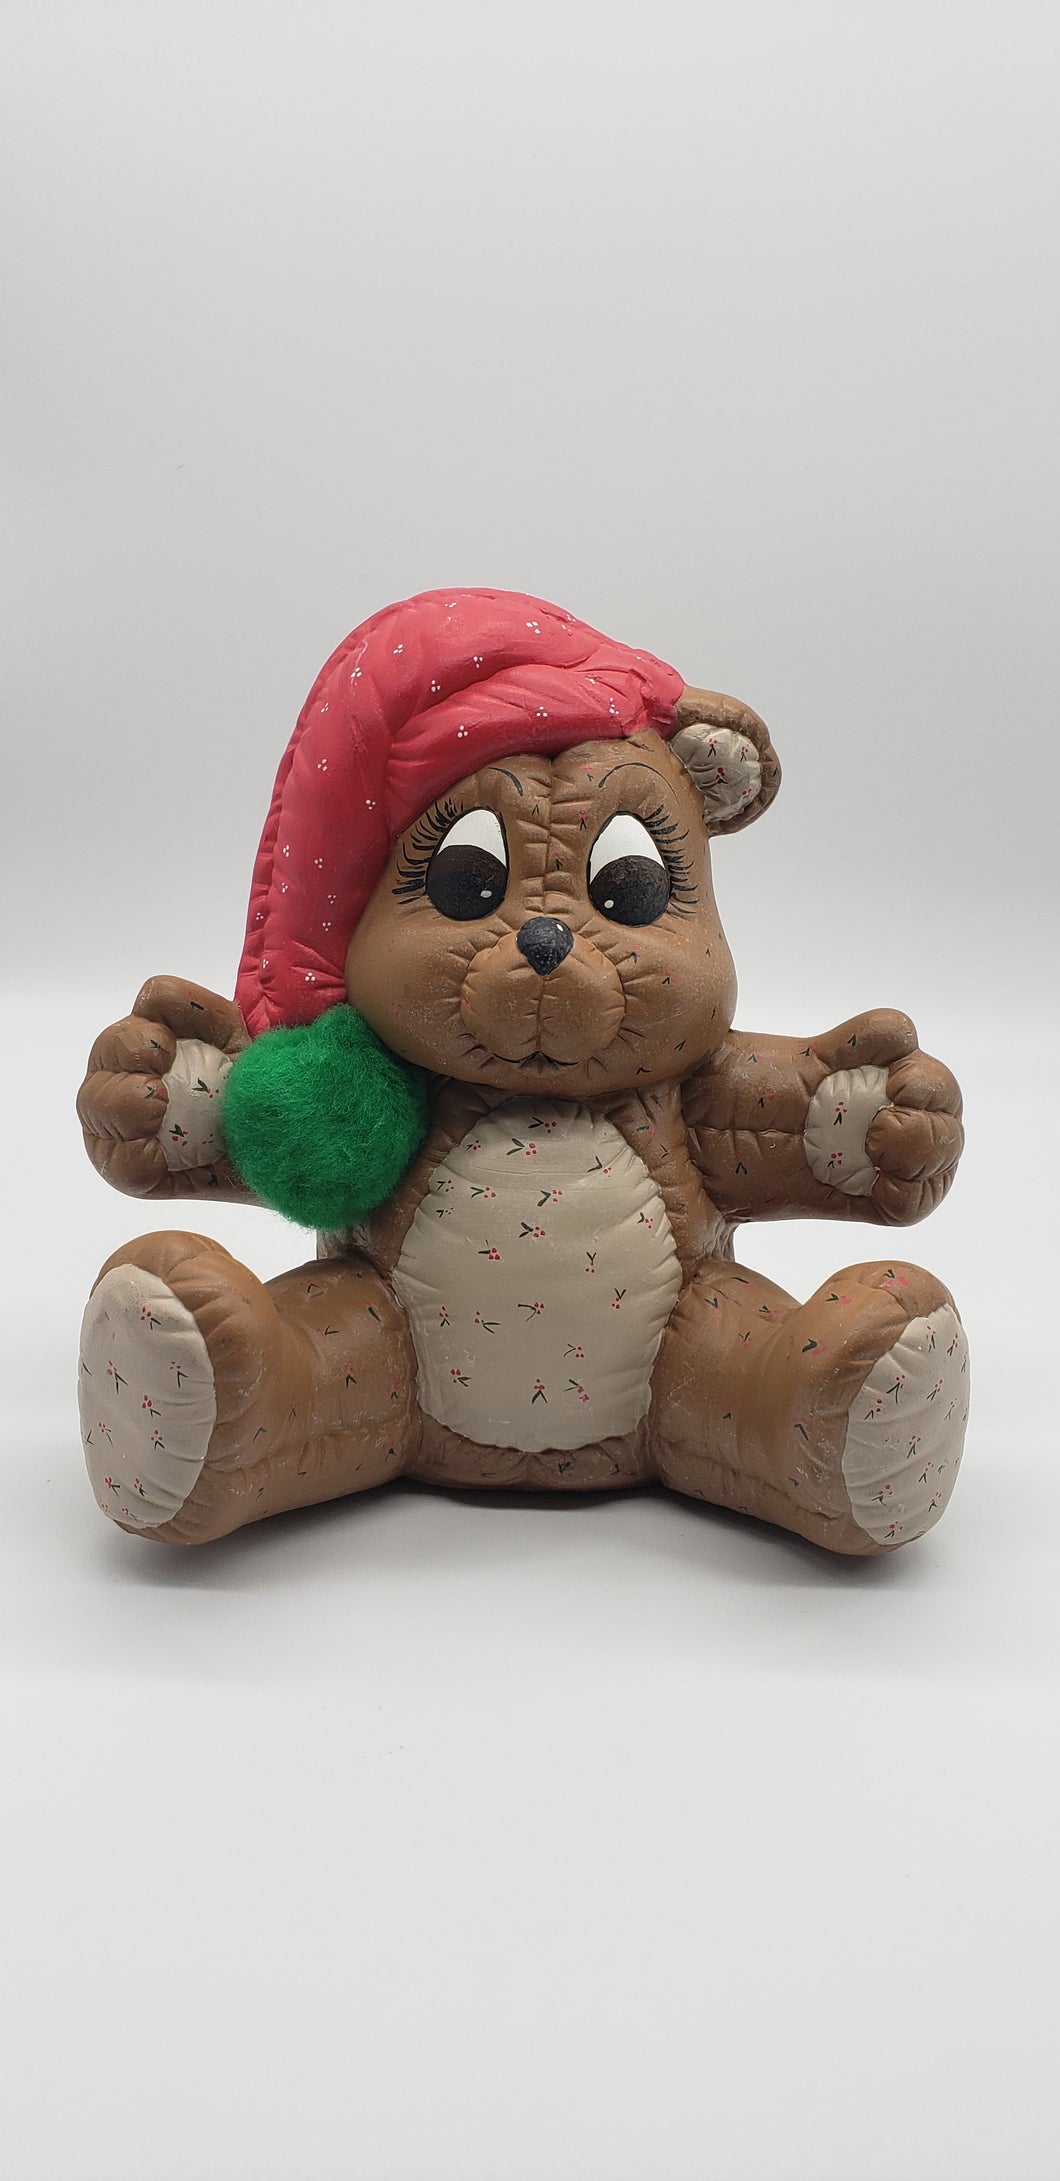 Vintage Ceramic Christmas Teddy Bear